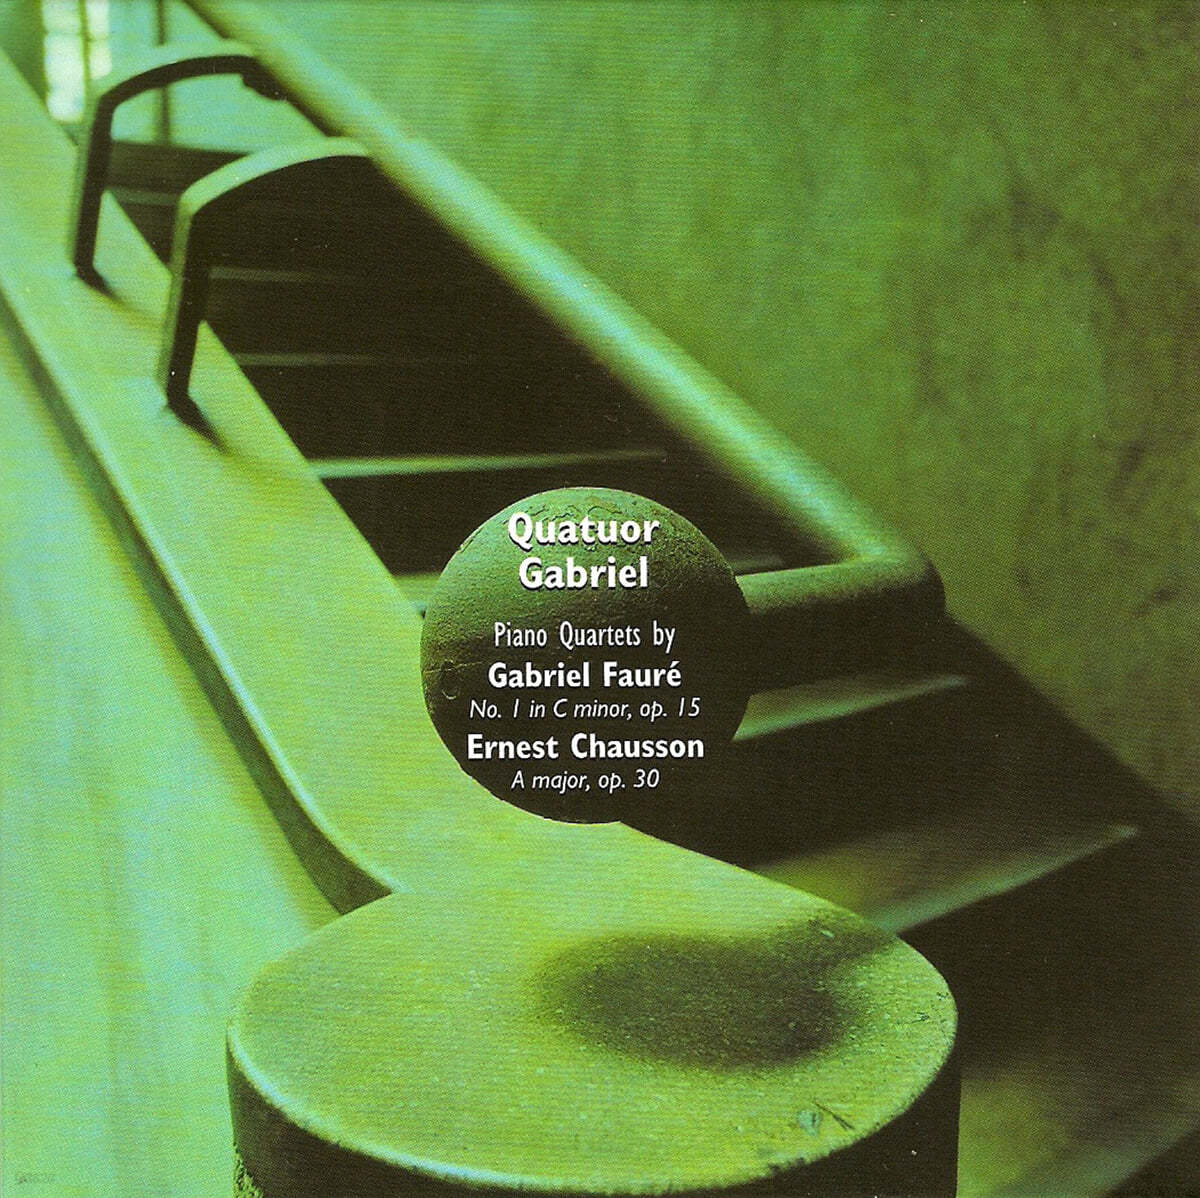 Quatuor Gabriel 포레 / 쇼숑: 피아노 사중주 (Piano Quartet by Gabriel Faure &amp; Ernest Chausson)